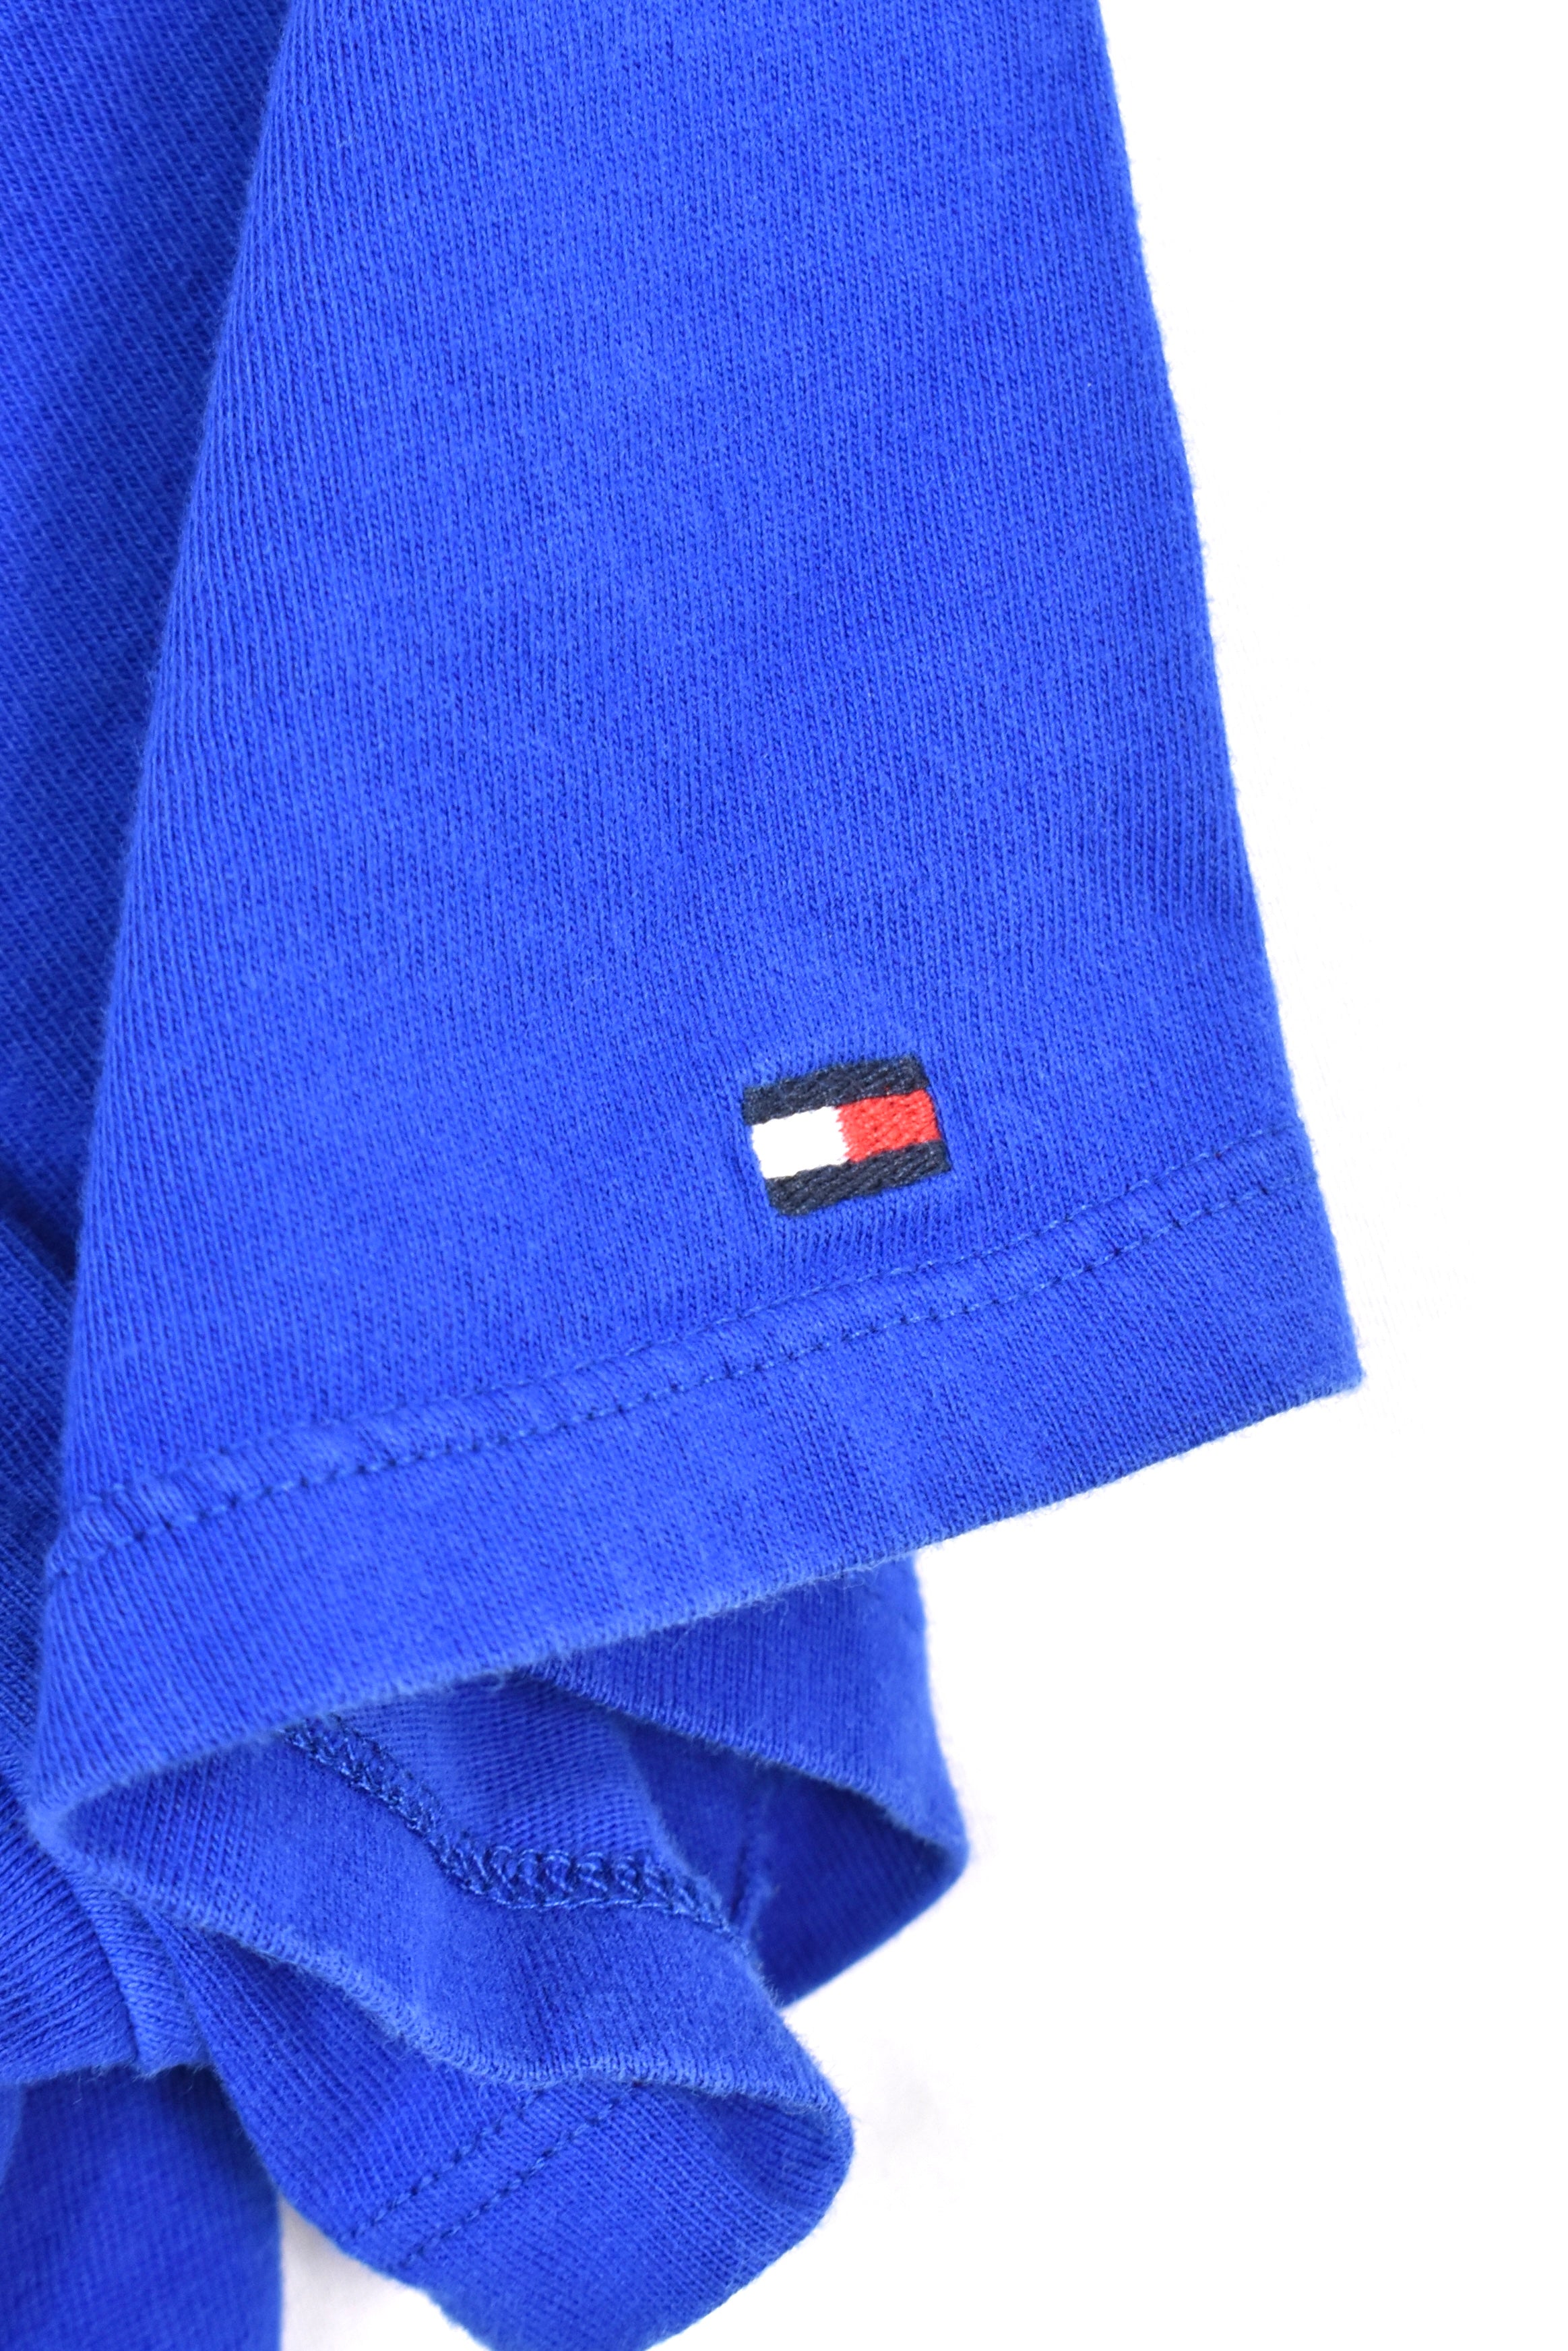 Women's modern Tommy Hilfiger shirt, short sleeve embroidered tee - medium, blue TOMMY HILFIGER